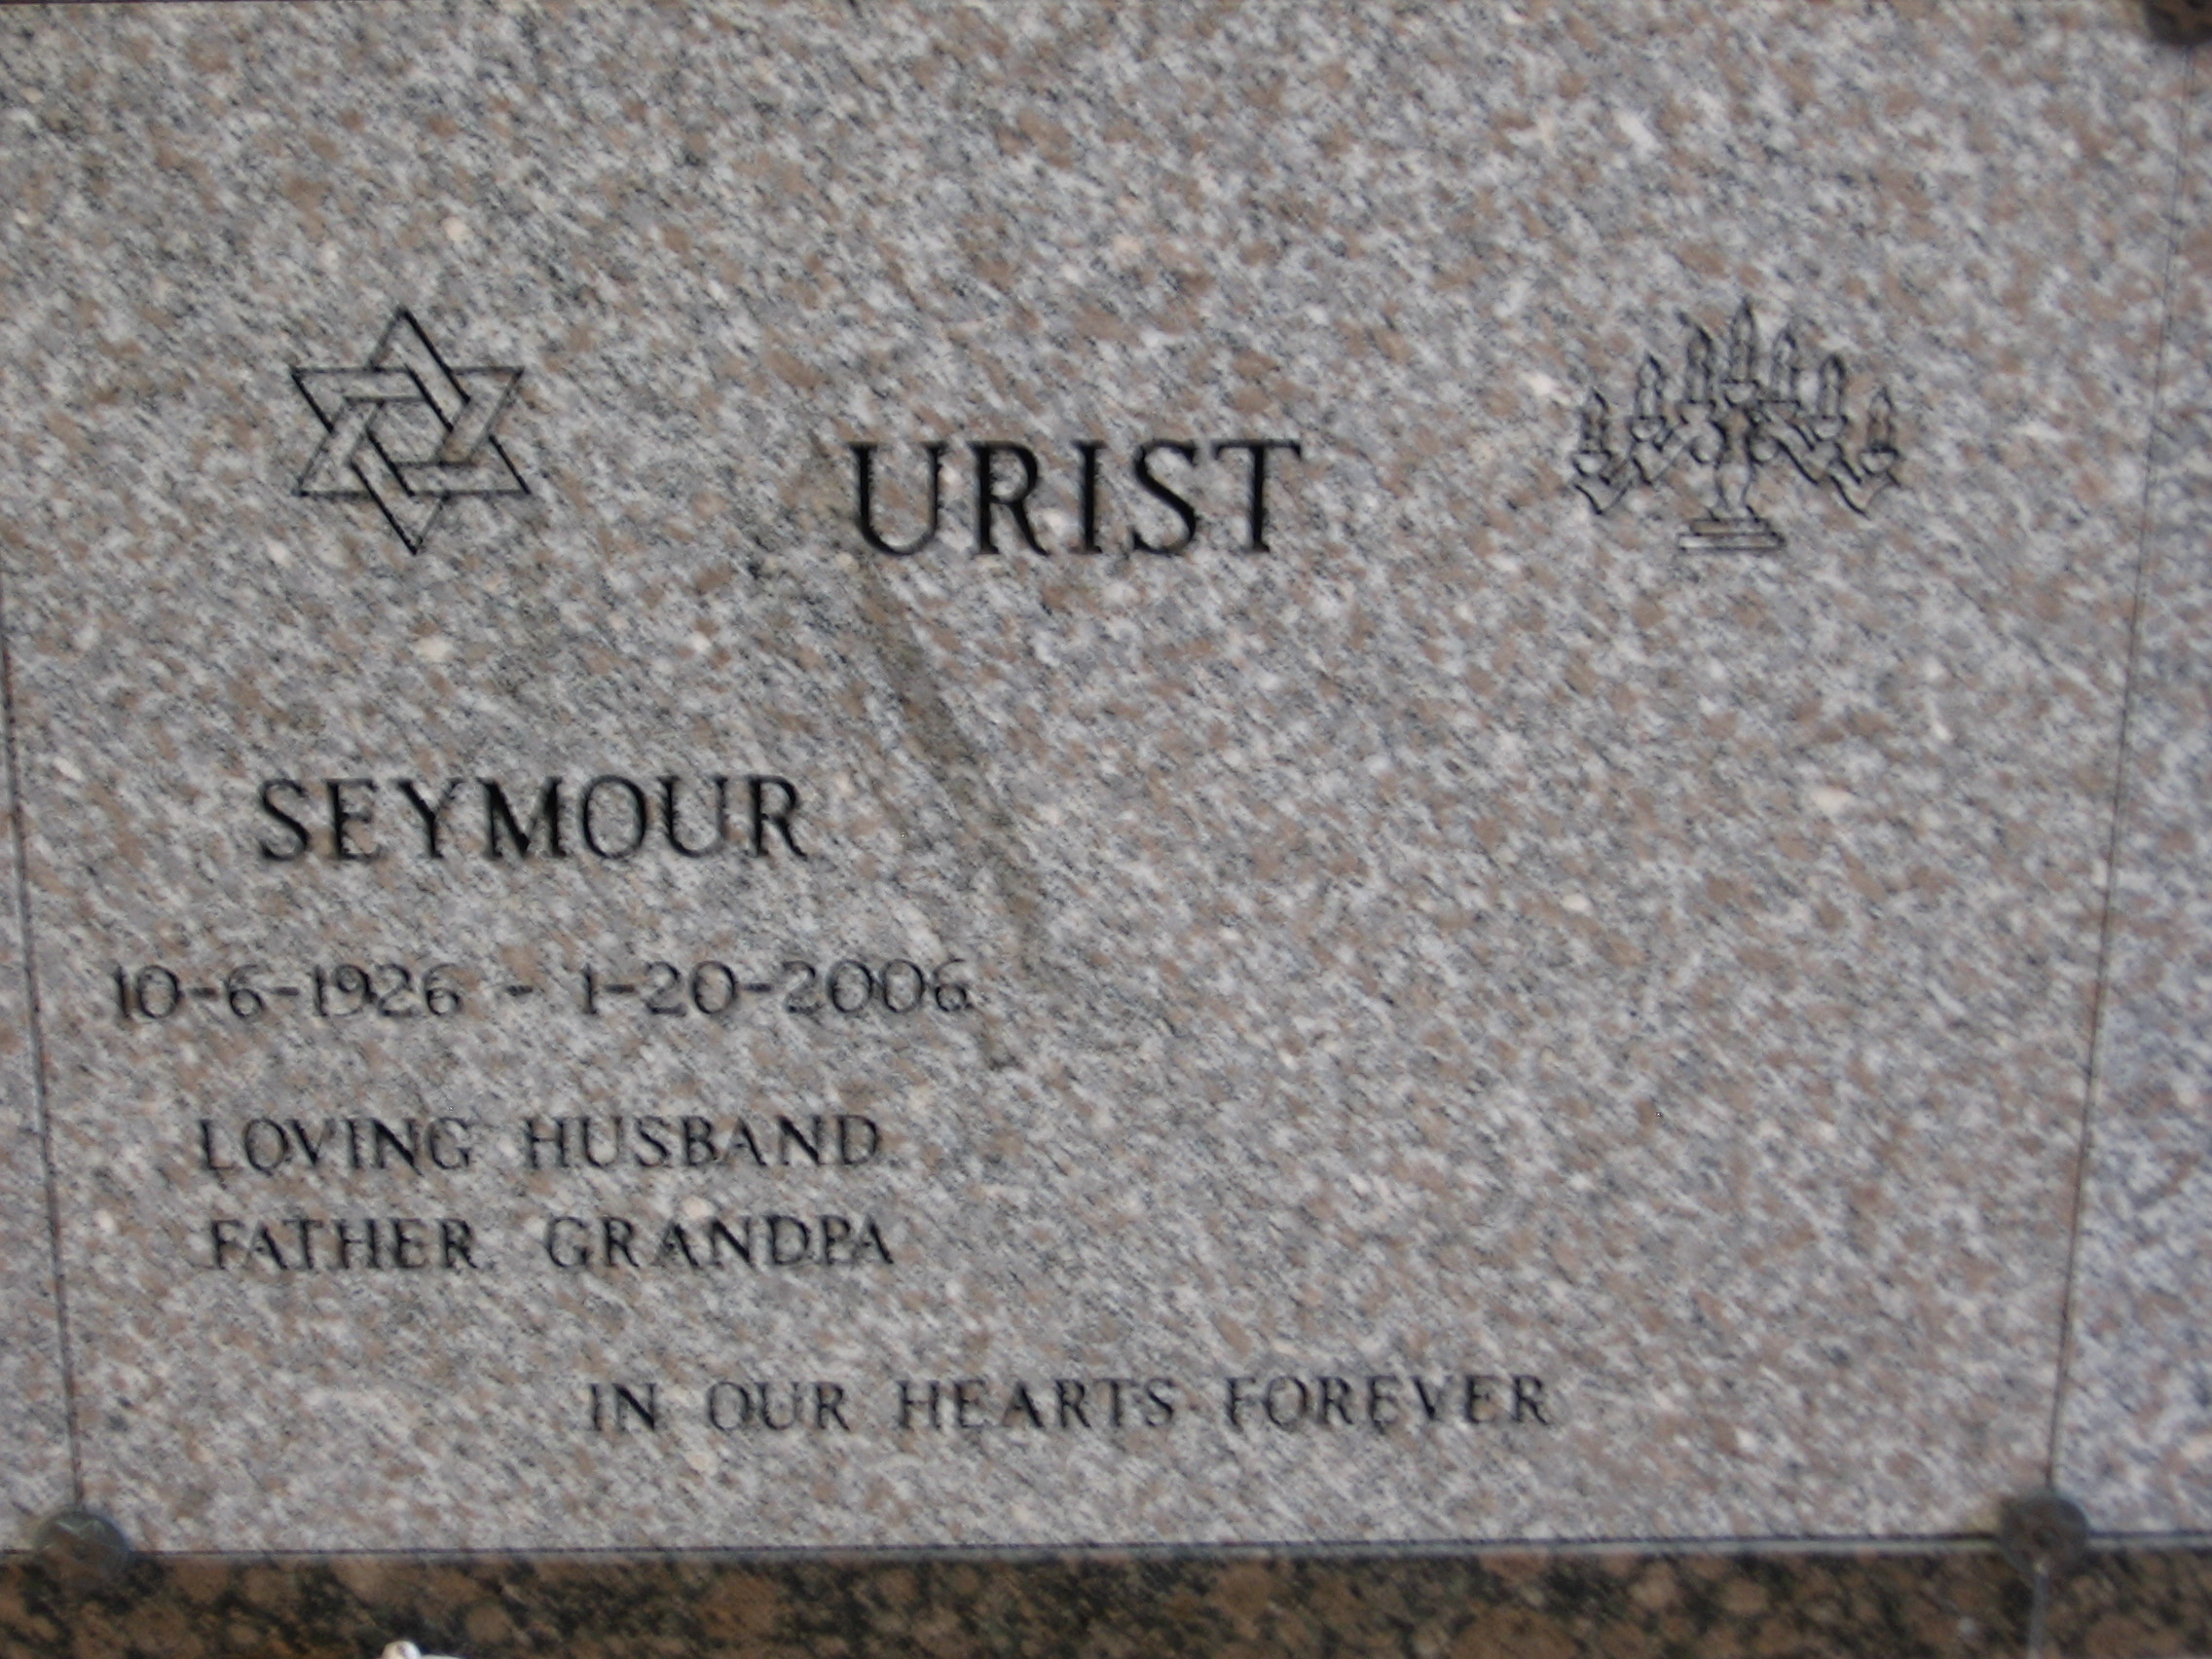 Seymour Urist